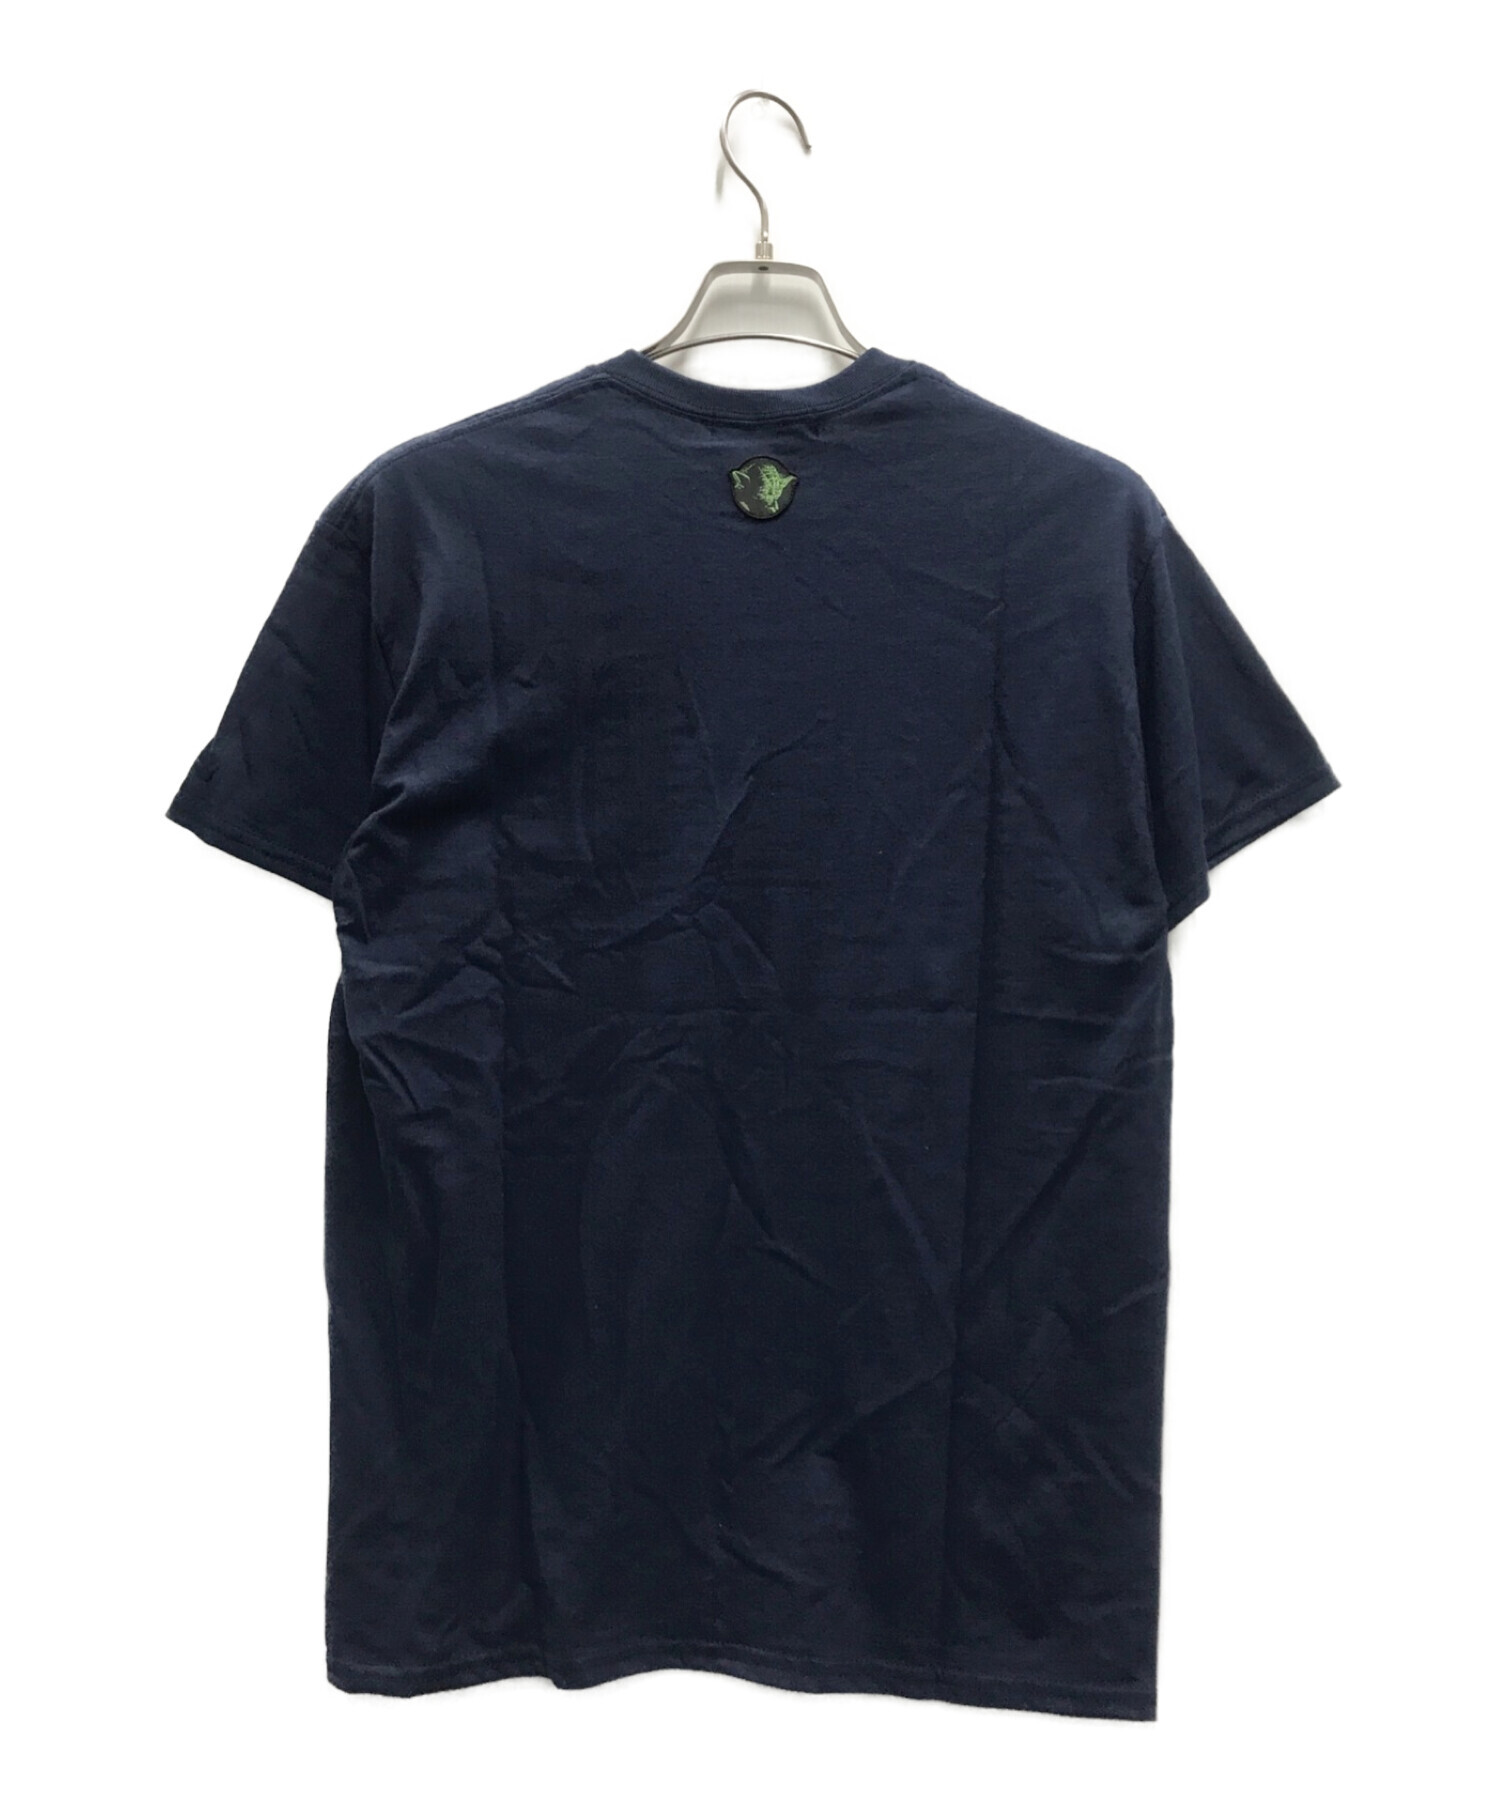 Tシャツ/カットソー(半袖/袖なし)【新品未使用】UNDERCOVER x STARWARS Tシャツ